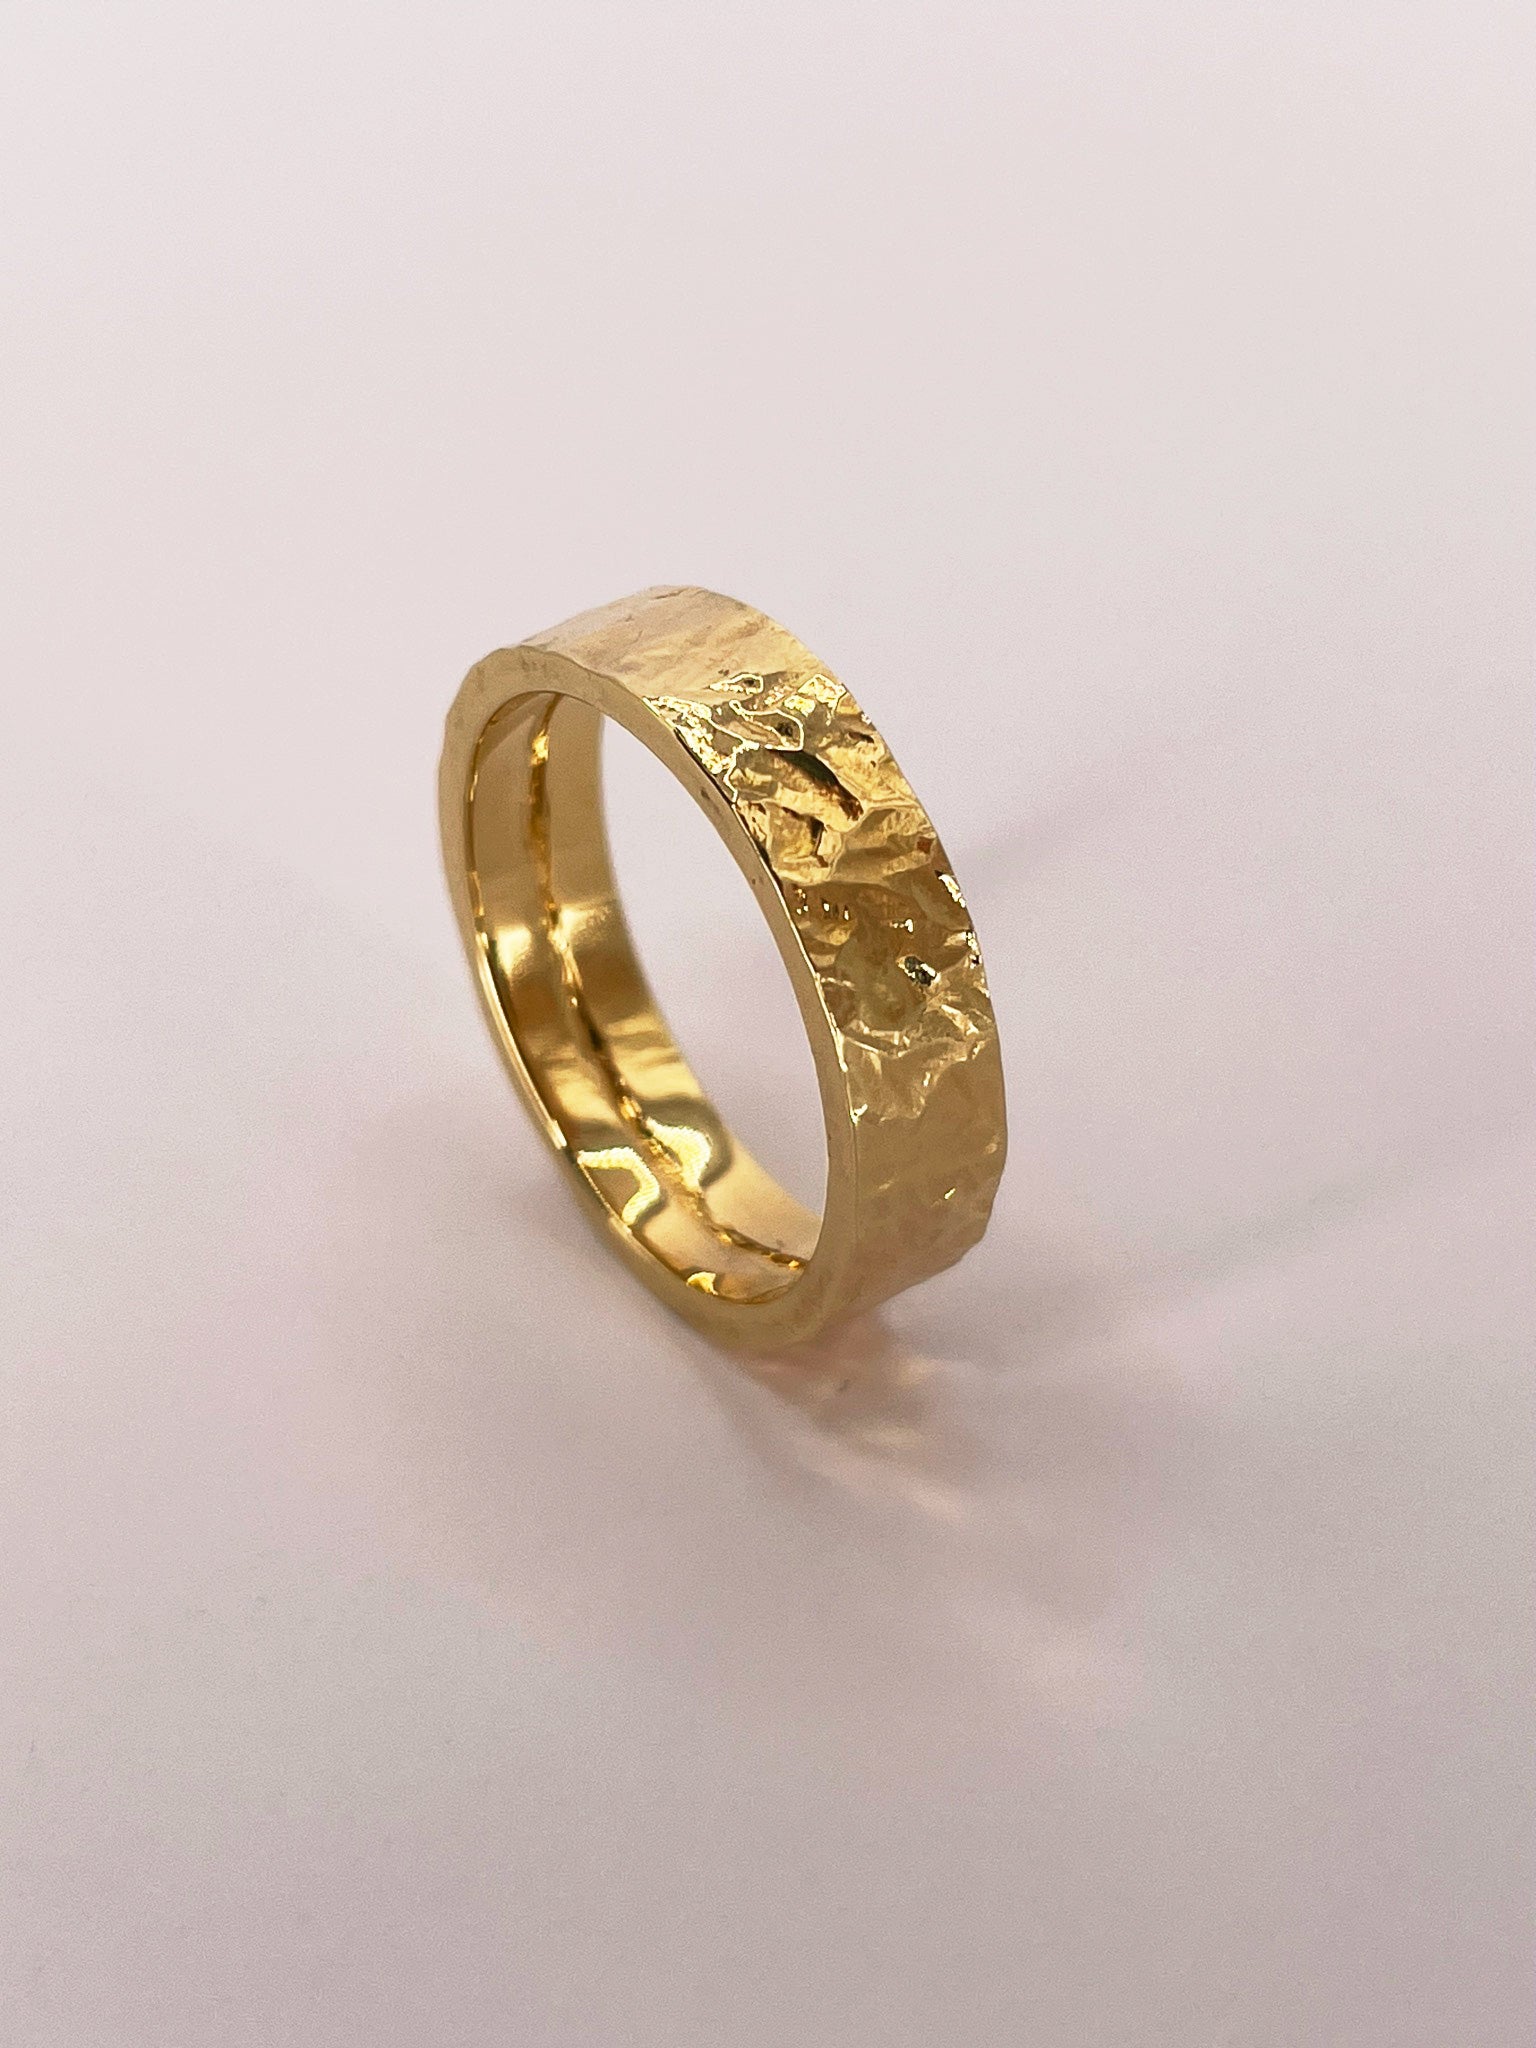 Wedding rings and engagement band designs handmade originals. – Cumbrian  Designs